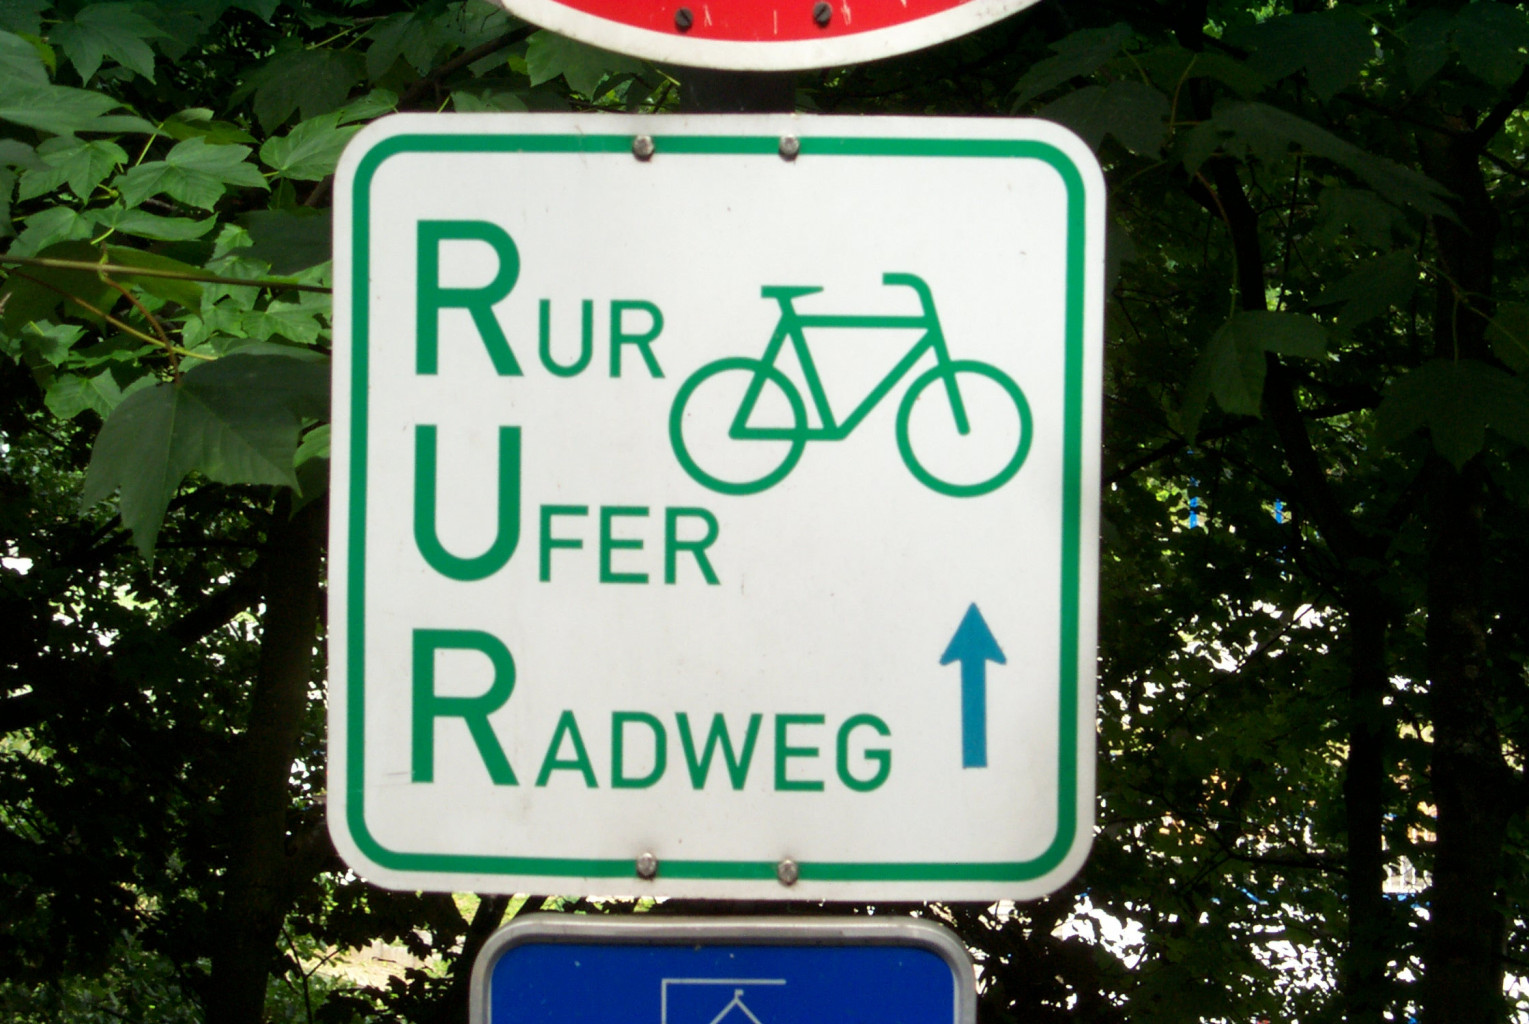 Rurufer-Radweg Schild